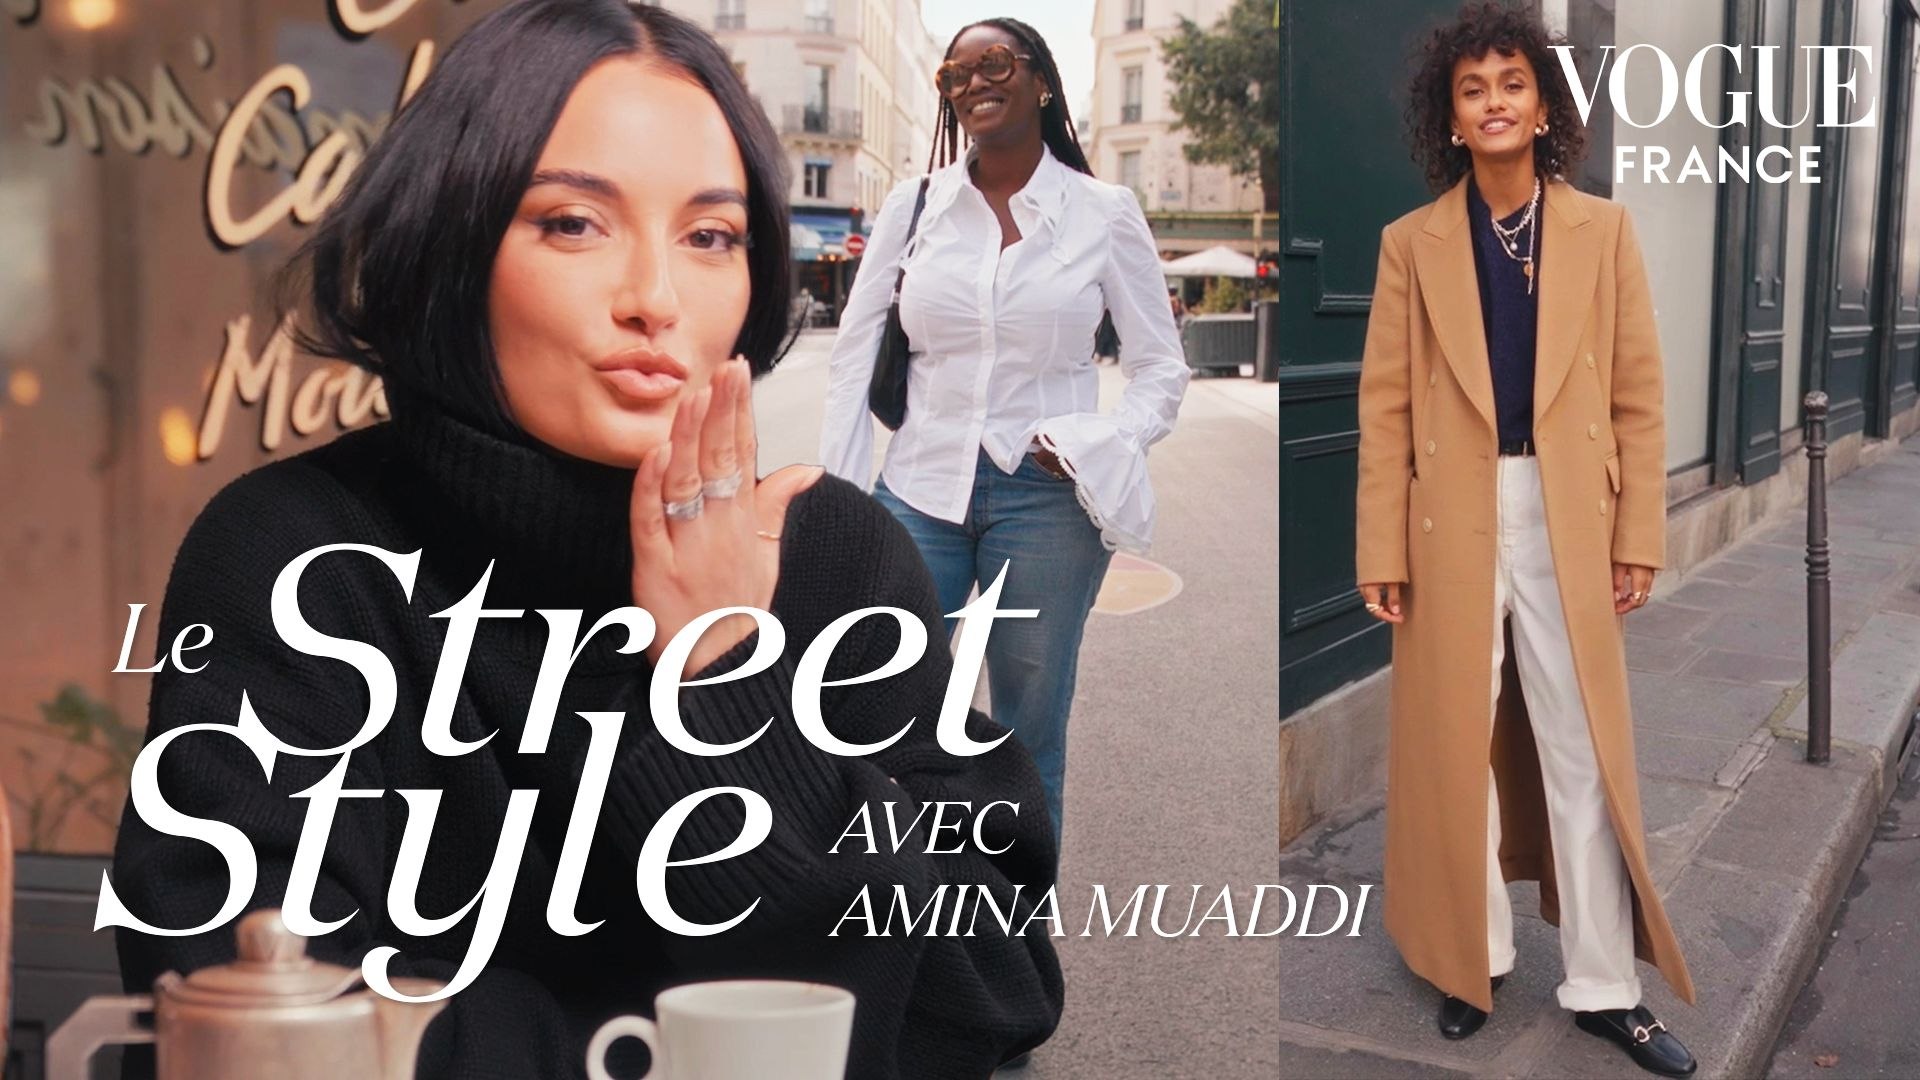 Le Street Style avec Lous and the Yakuza, Vogue France